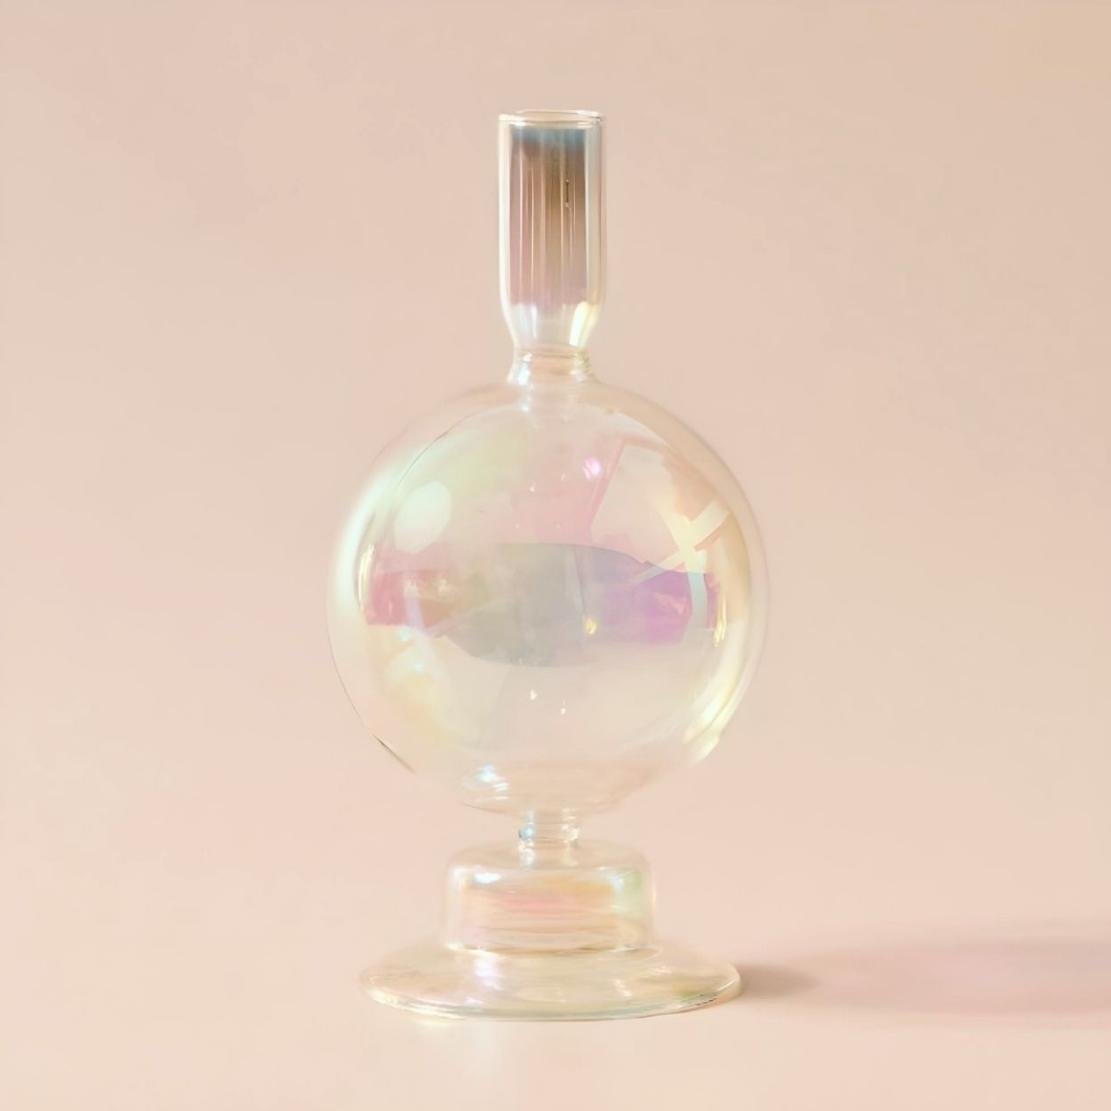 Spherical ball glass shiny candlestick holder